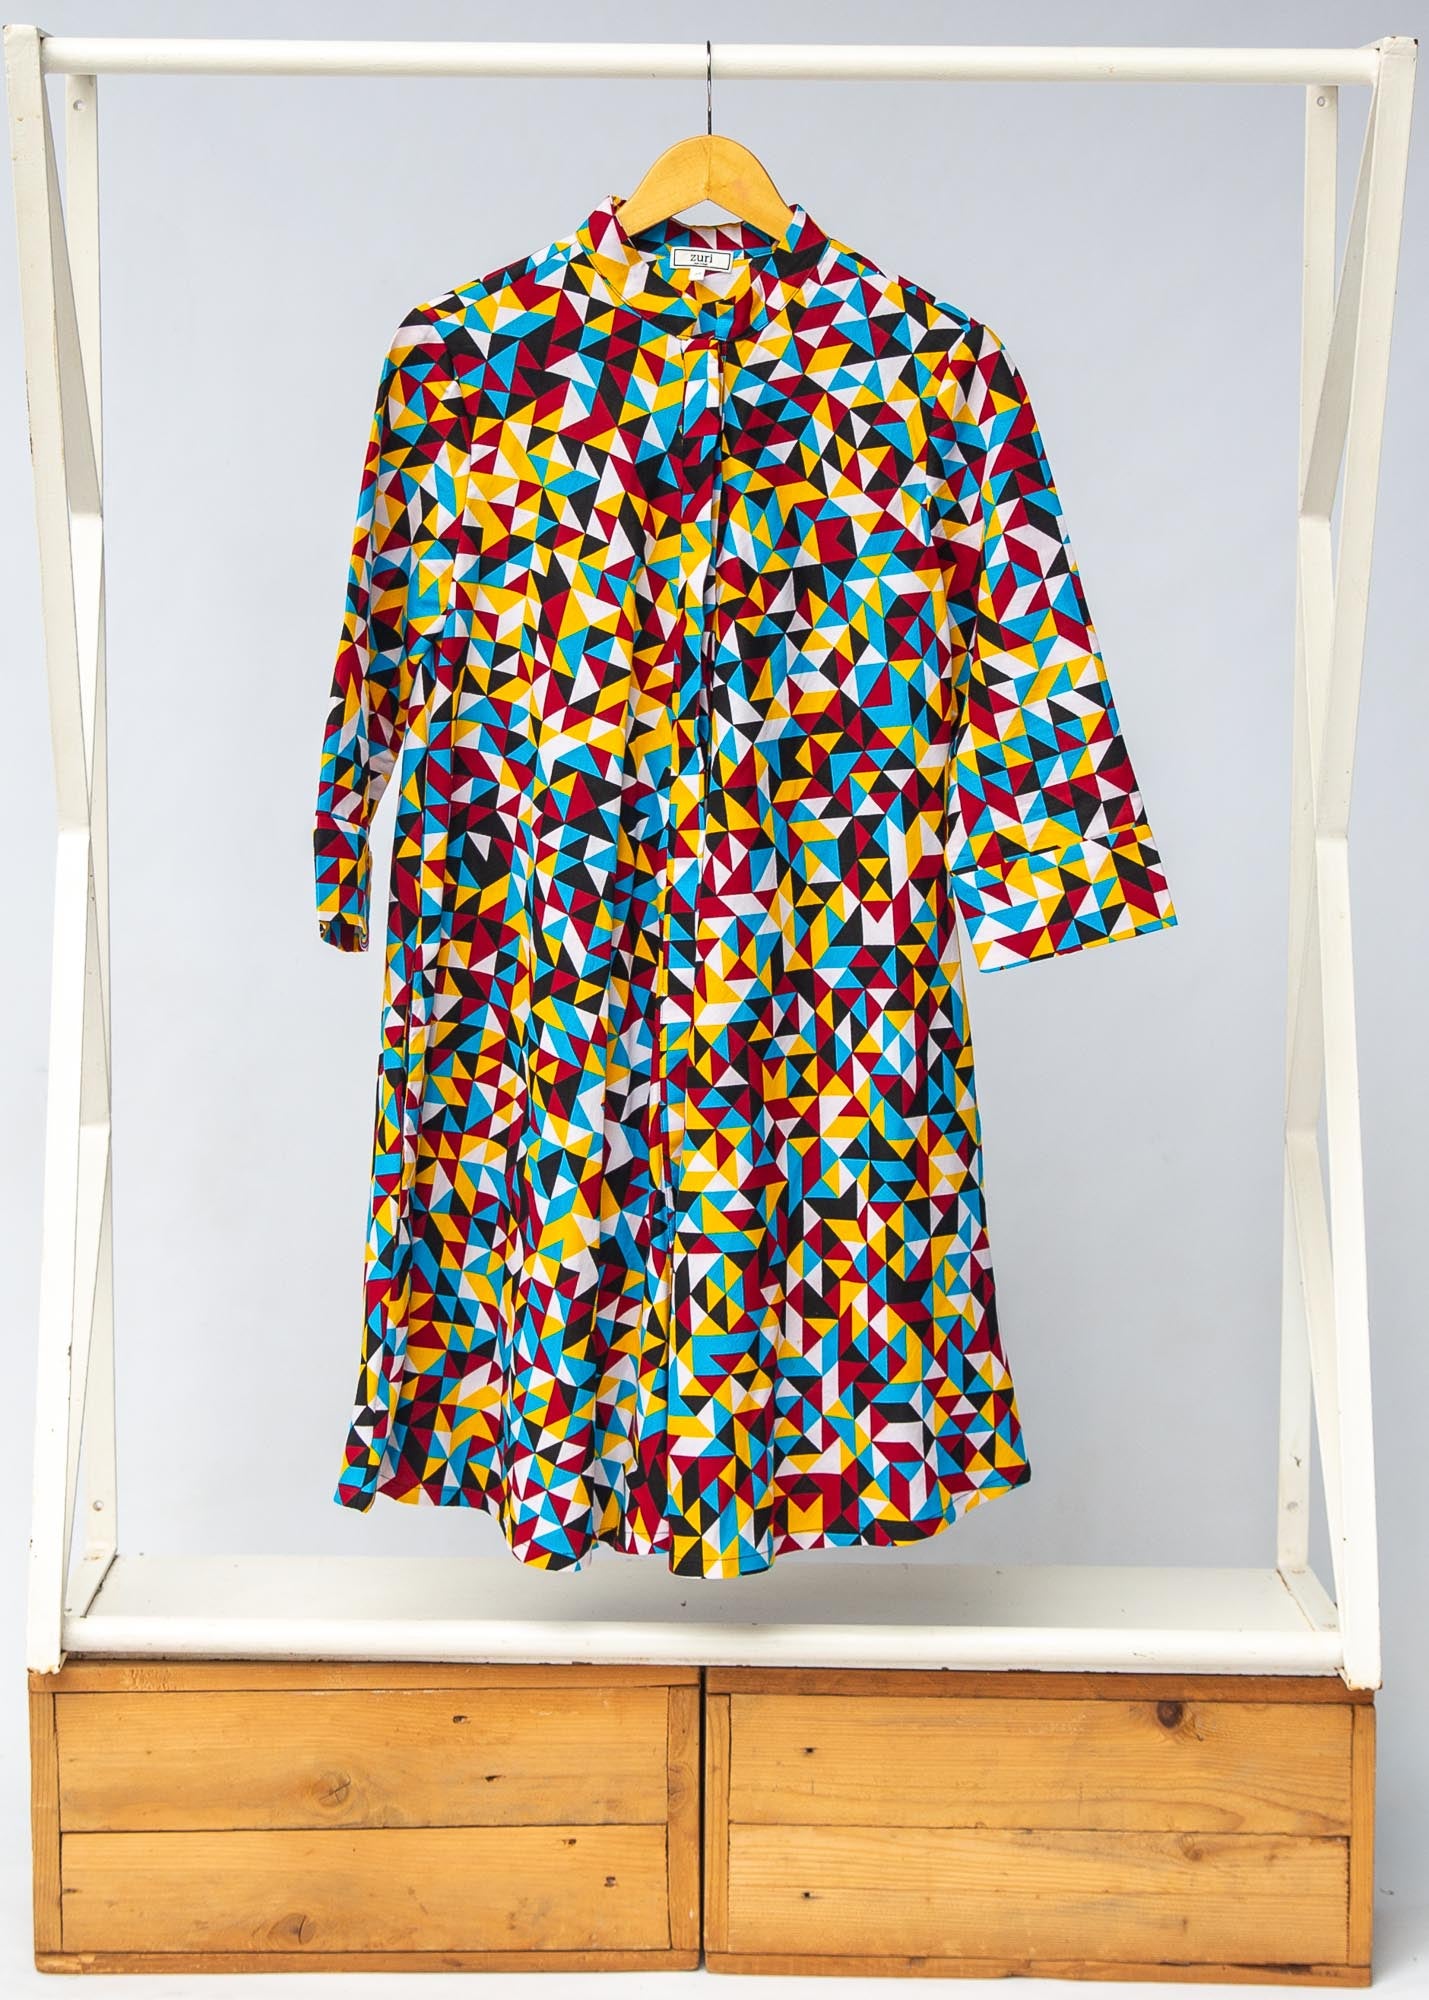 Display of multi colored geometric print dress